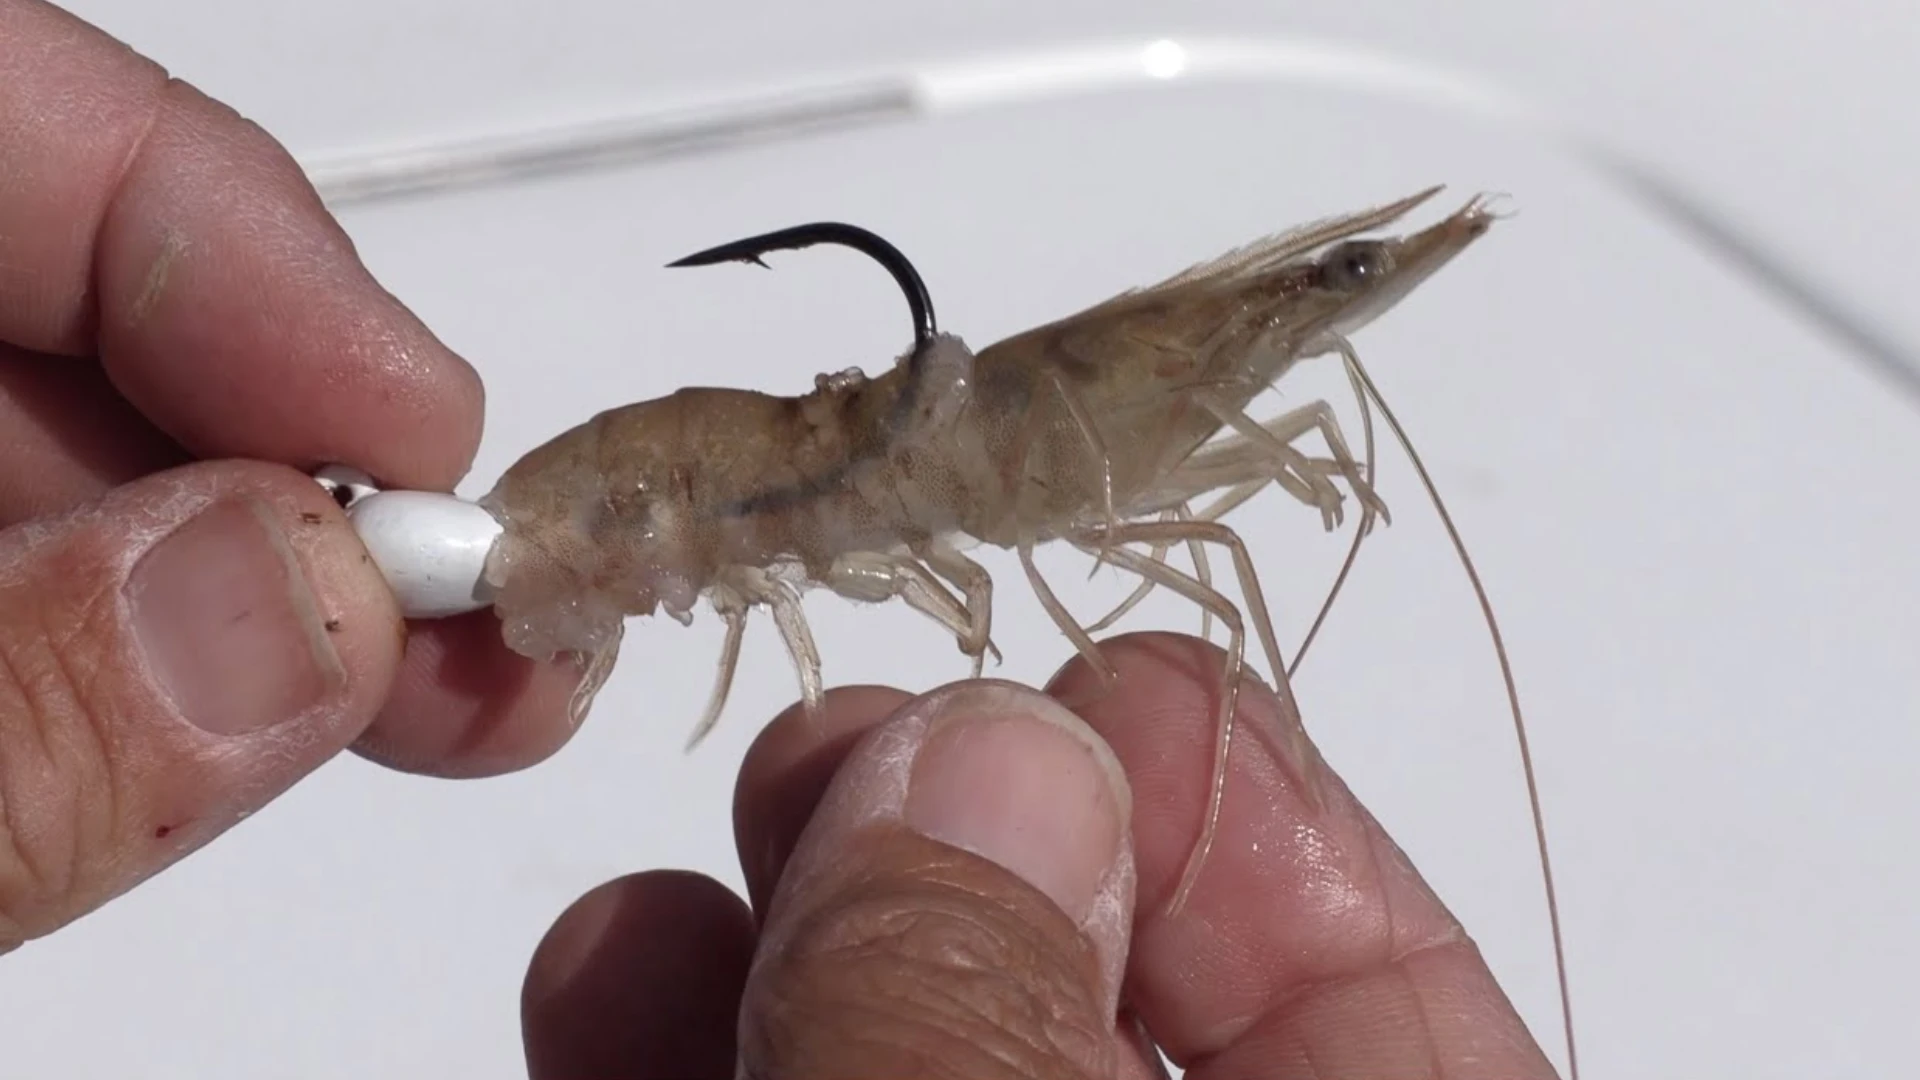 How to Hook a Shrimp Bait